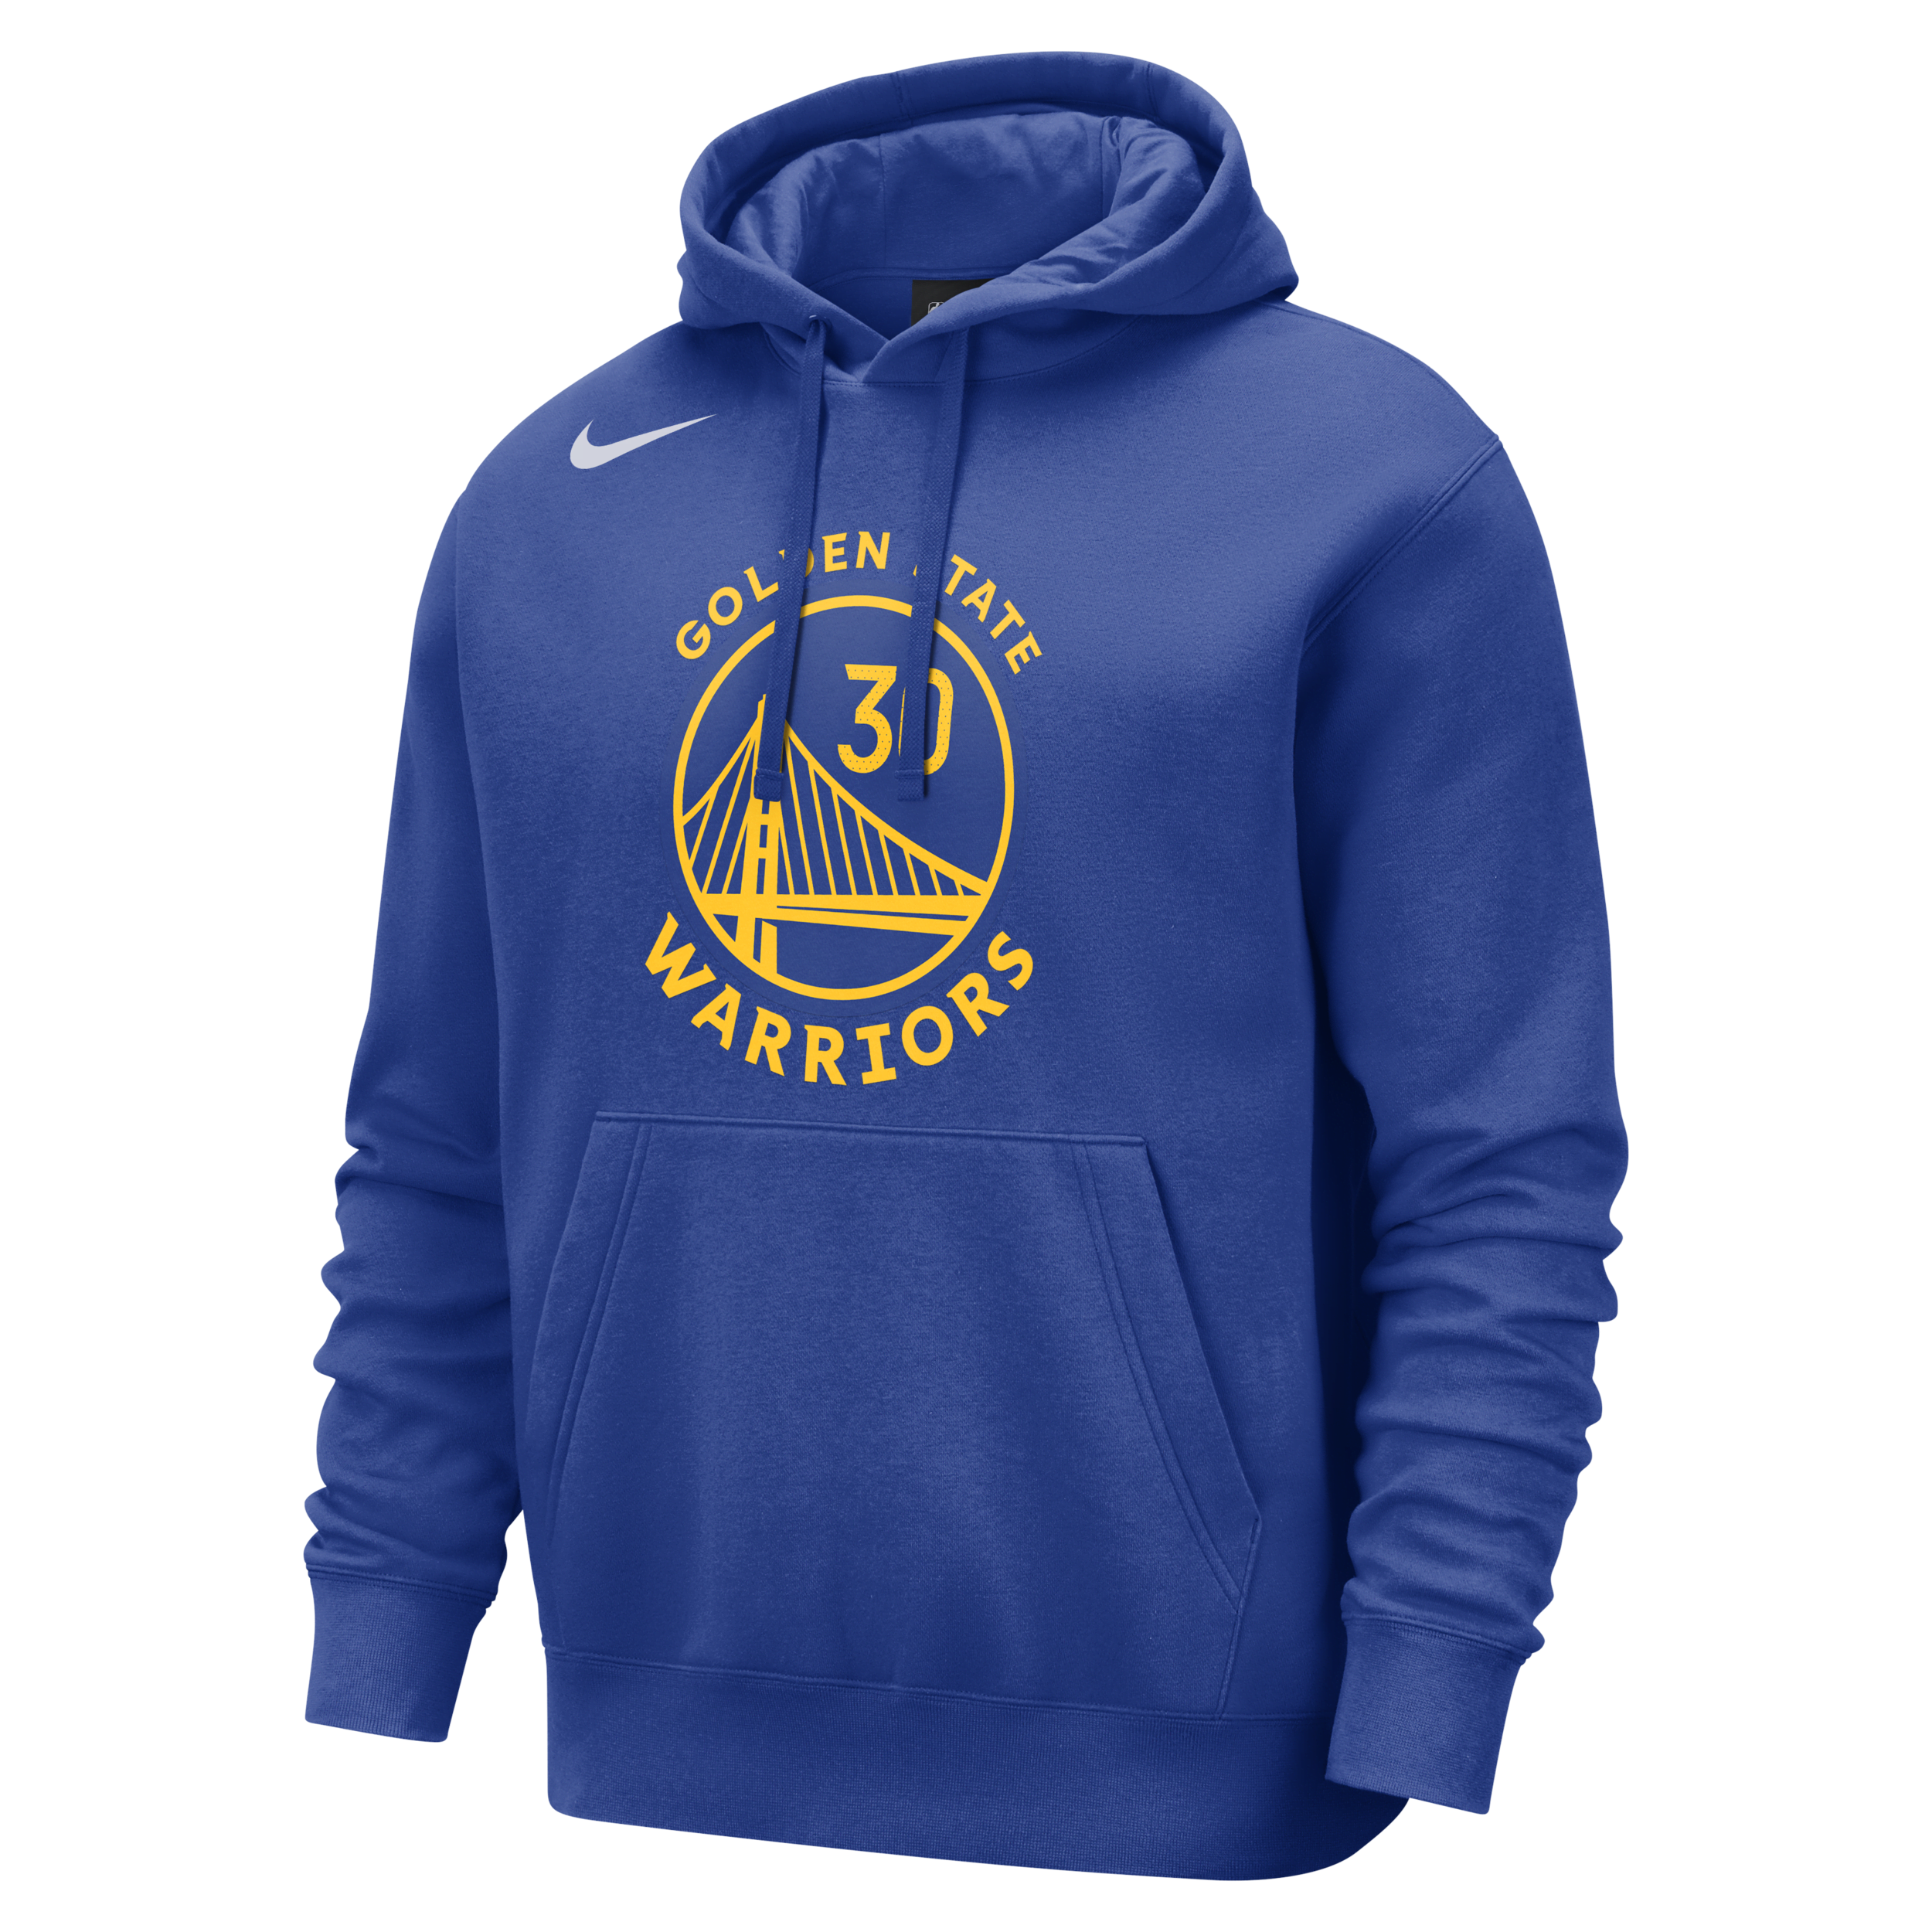 Golden State Warriors Club Sudadera con capucha Nike de la NBA - Hombre - Azul